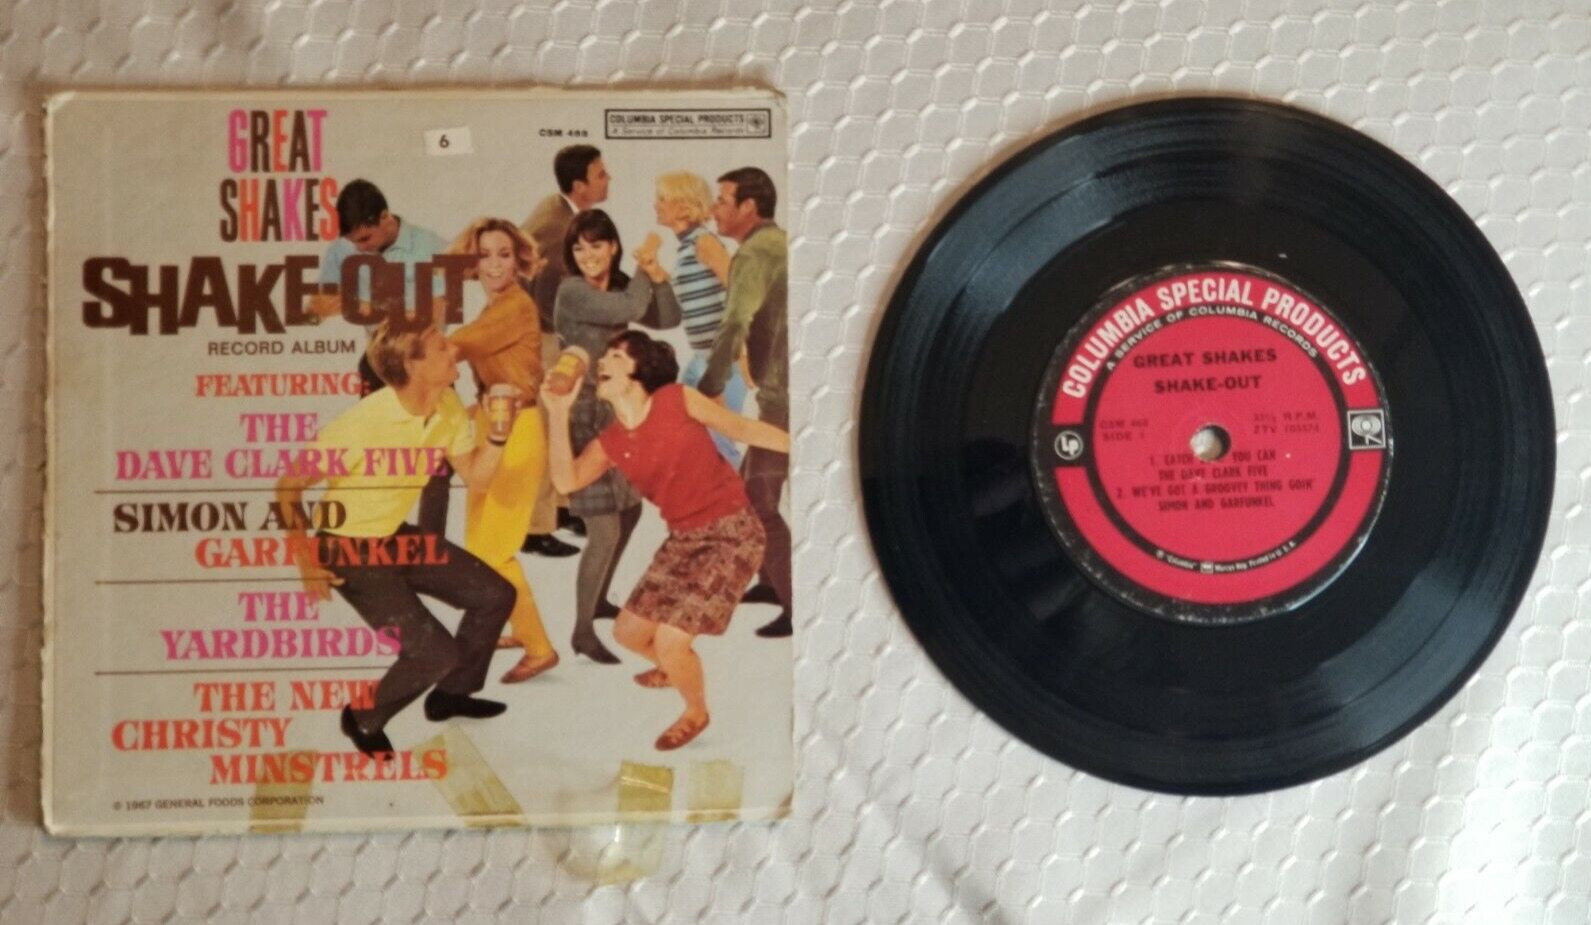 Great Shakes Shake Out 33 Vinyl Record & Sleeve Dave Clark Five, Simon Garfunkel